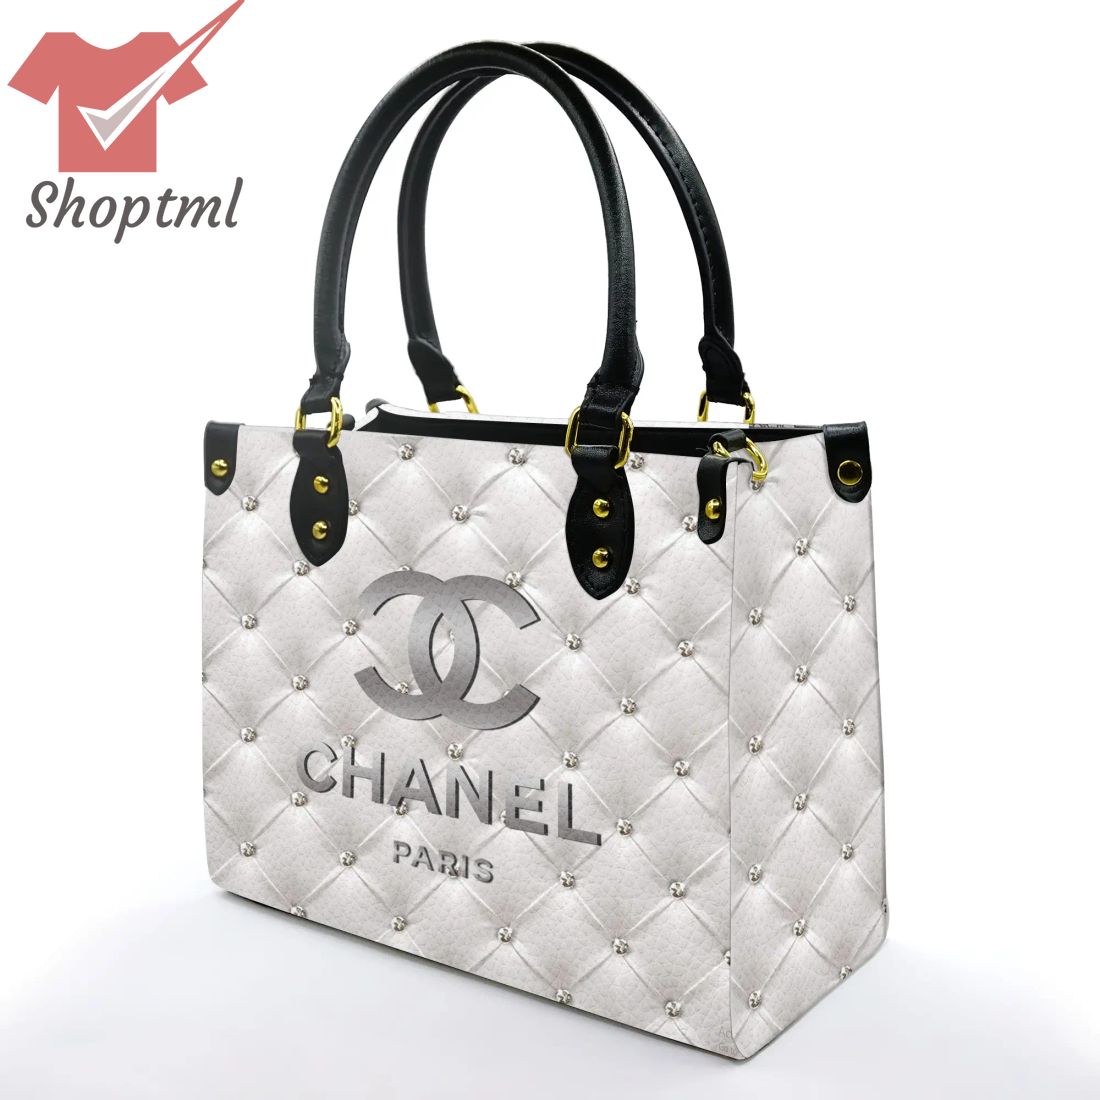 Chanel Paris Black Strap Grey Background Leather Handbag